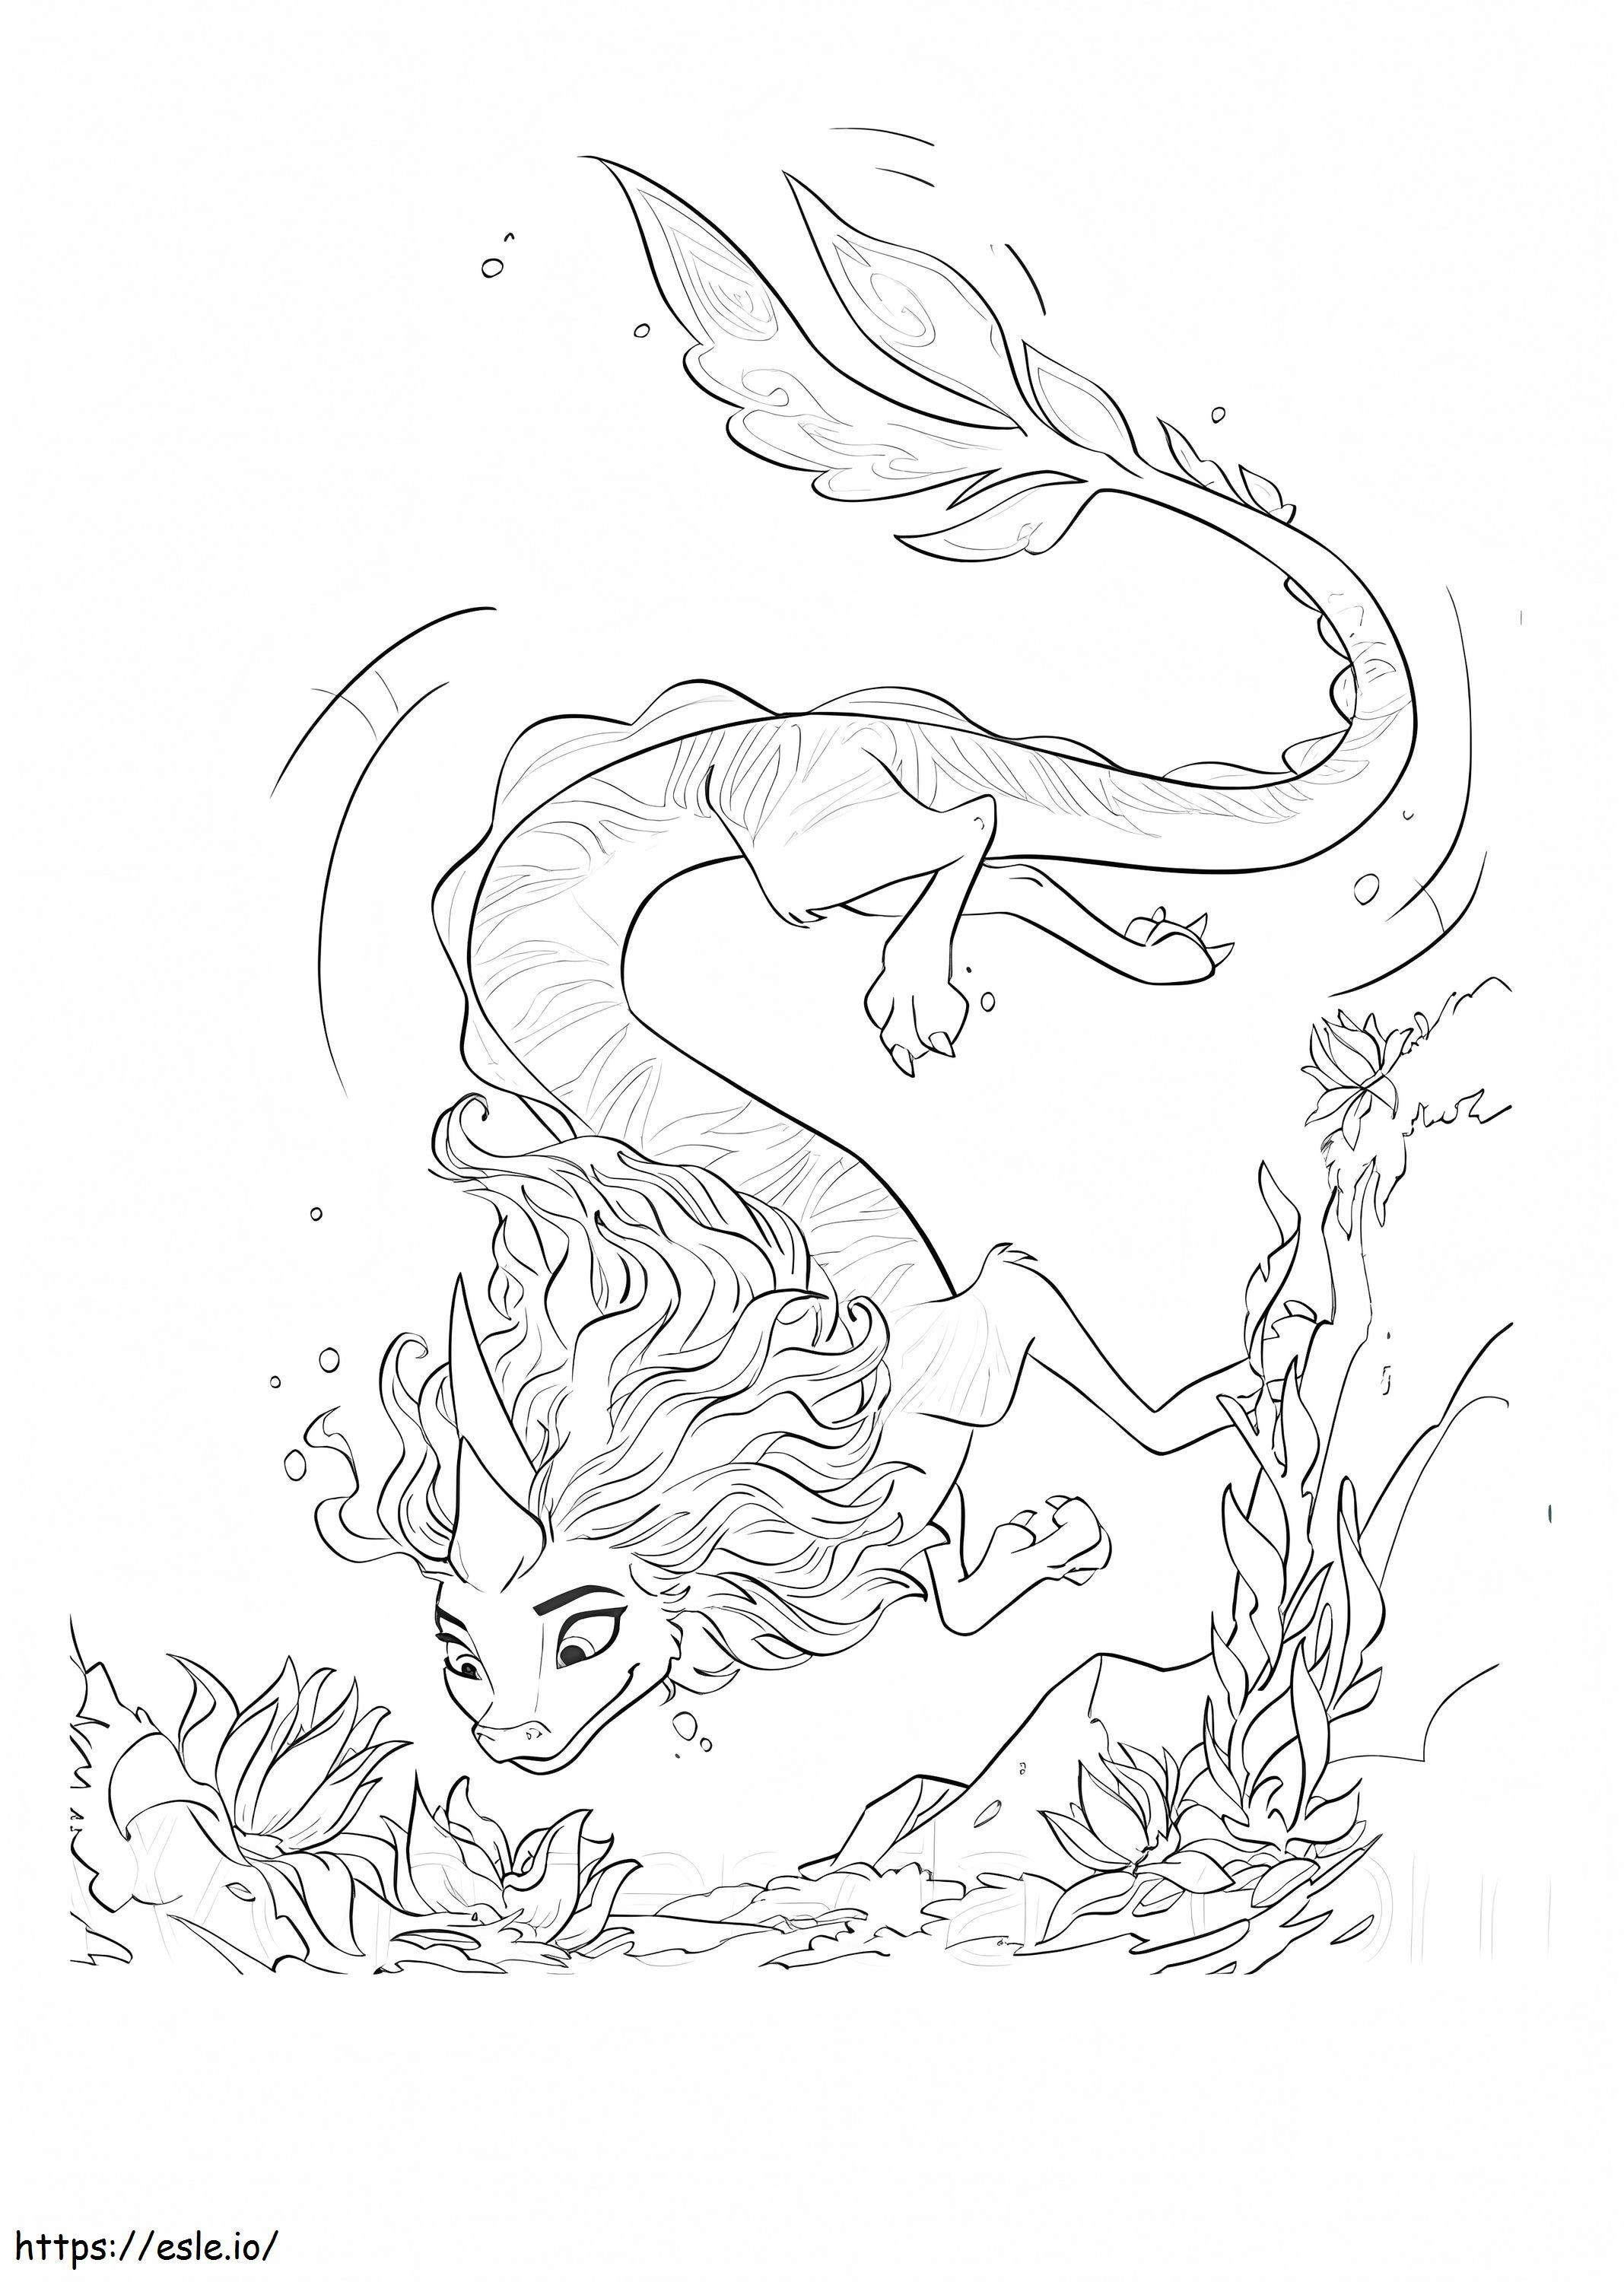 Dragon Guts coloring page